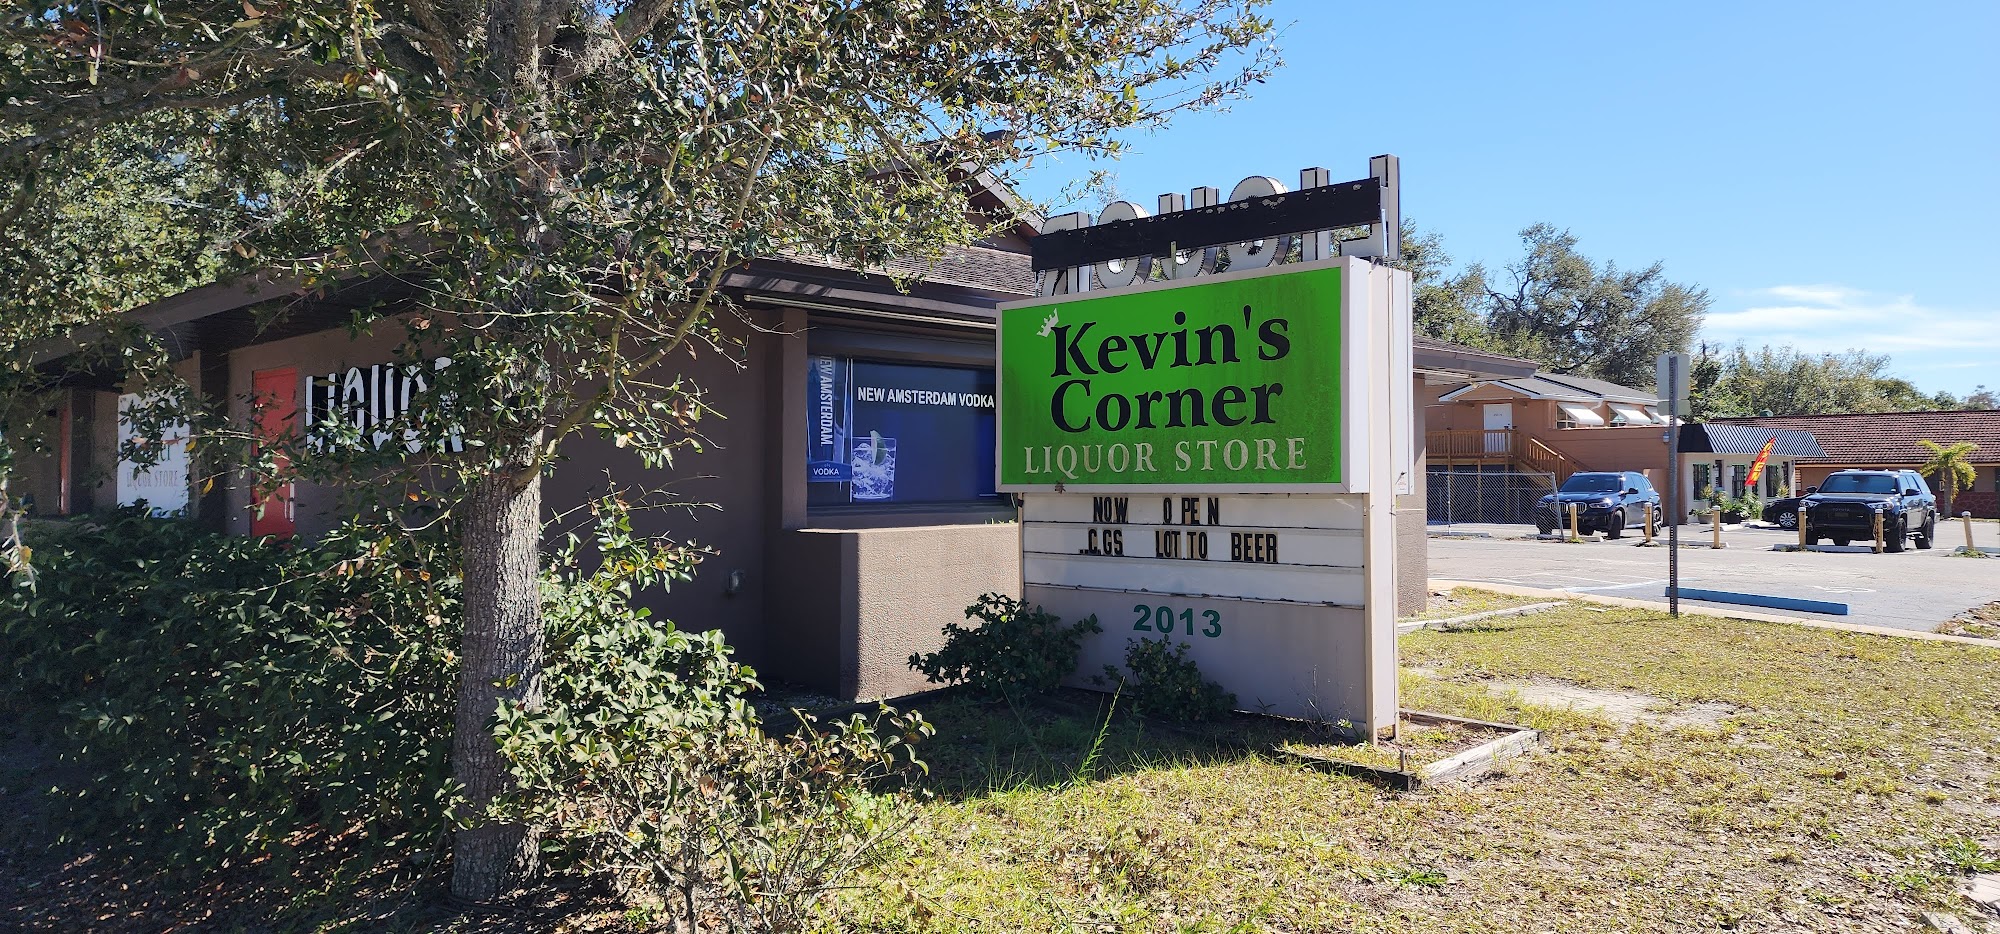 Kevin's Liquor Store